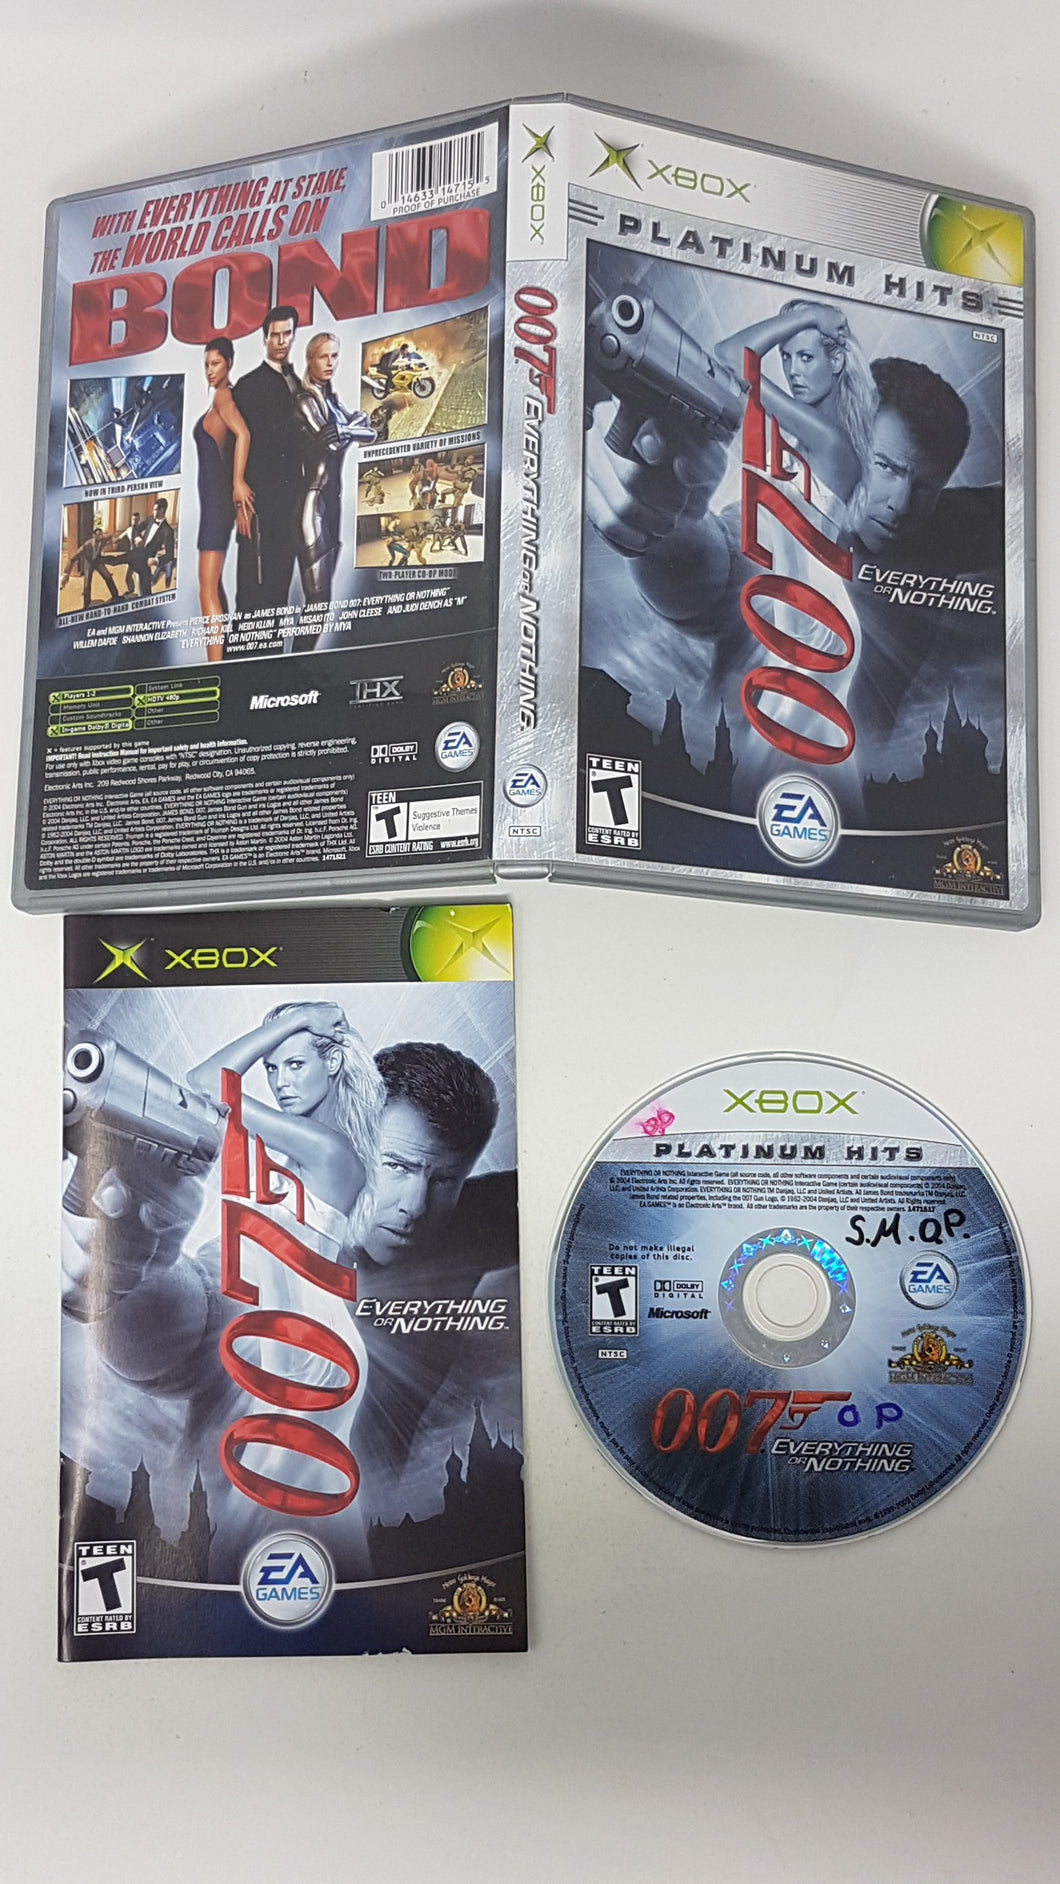 007 Everything or Nothing [Platinum Hits] - Microsoft Xbox